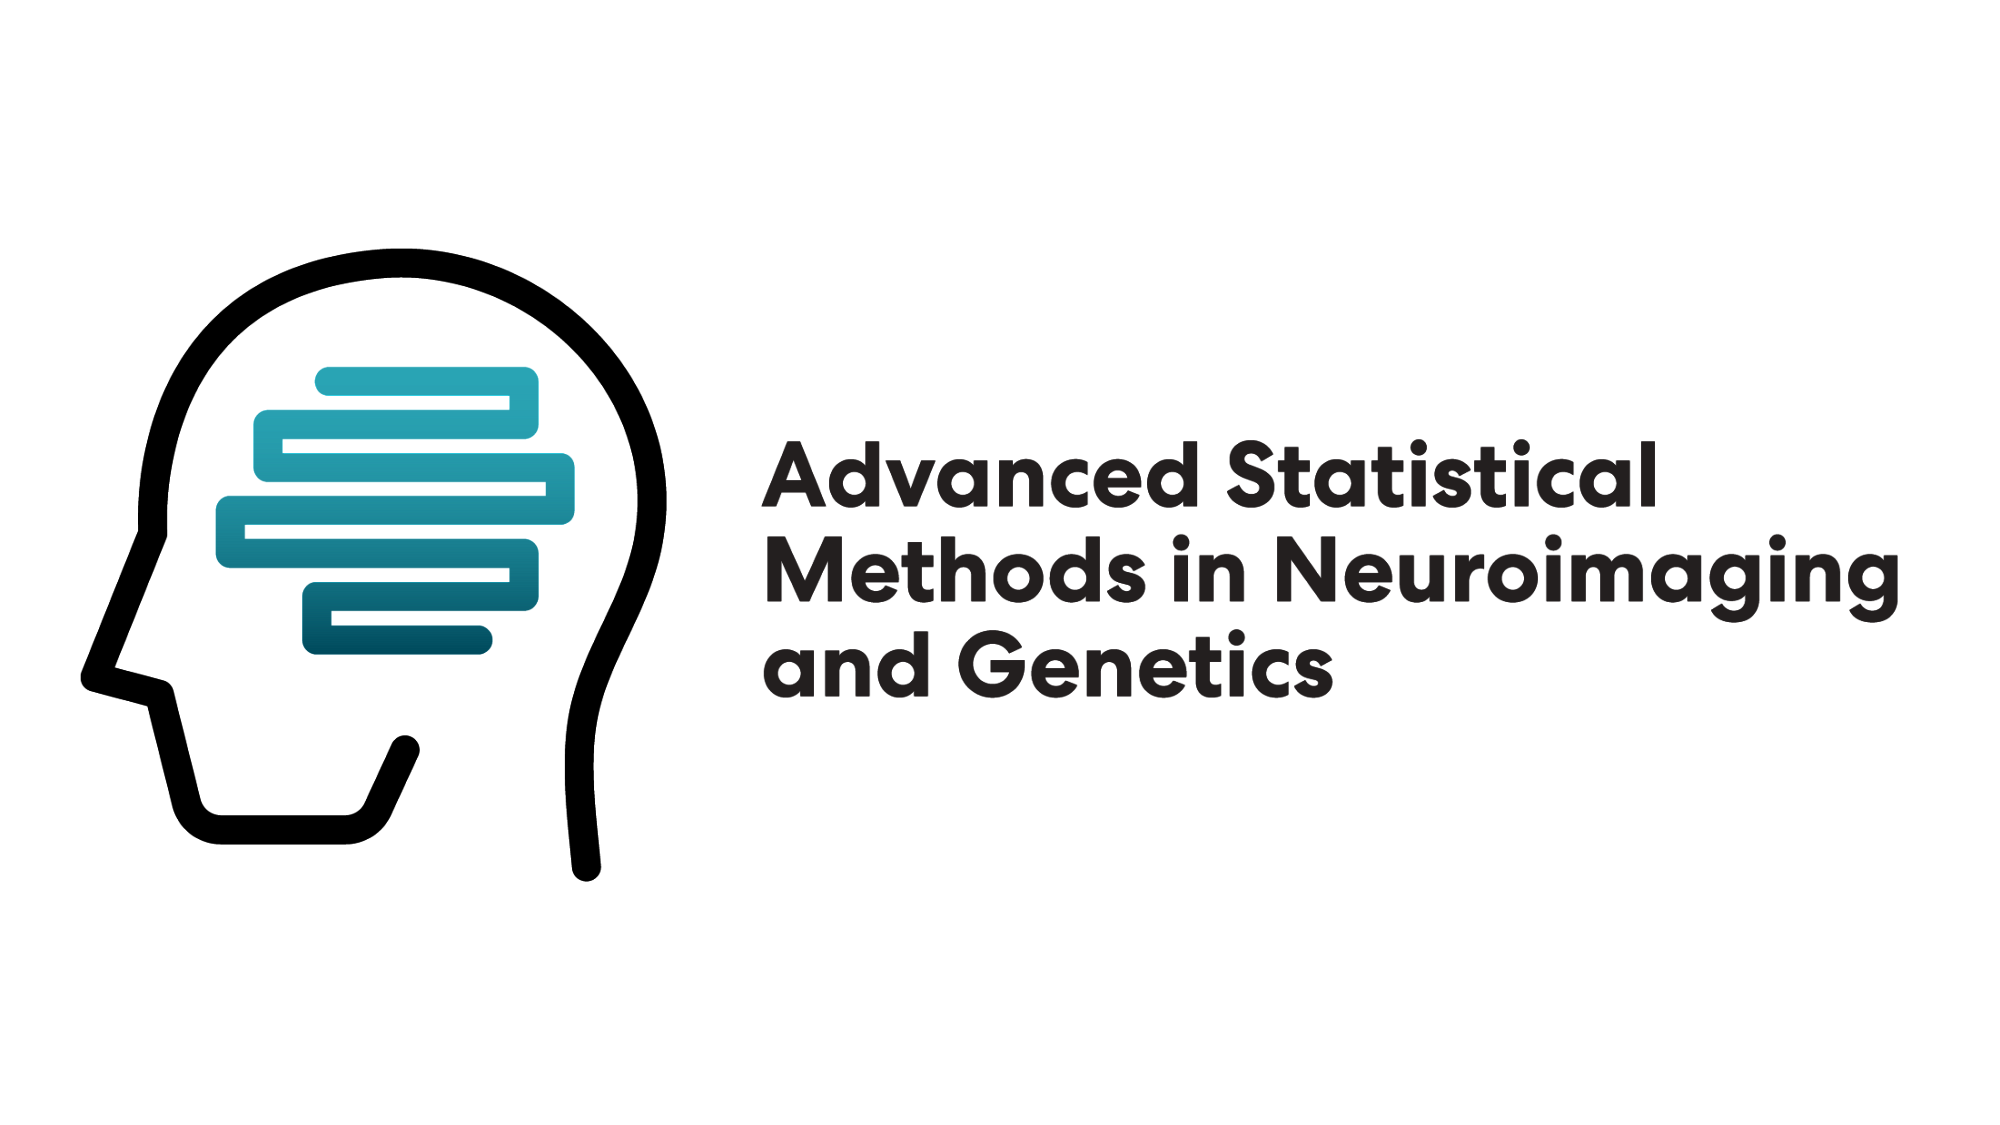 Advanced Statistical Methods logo